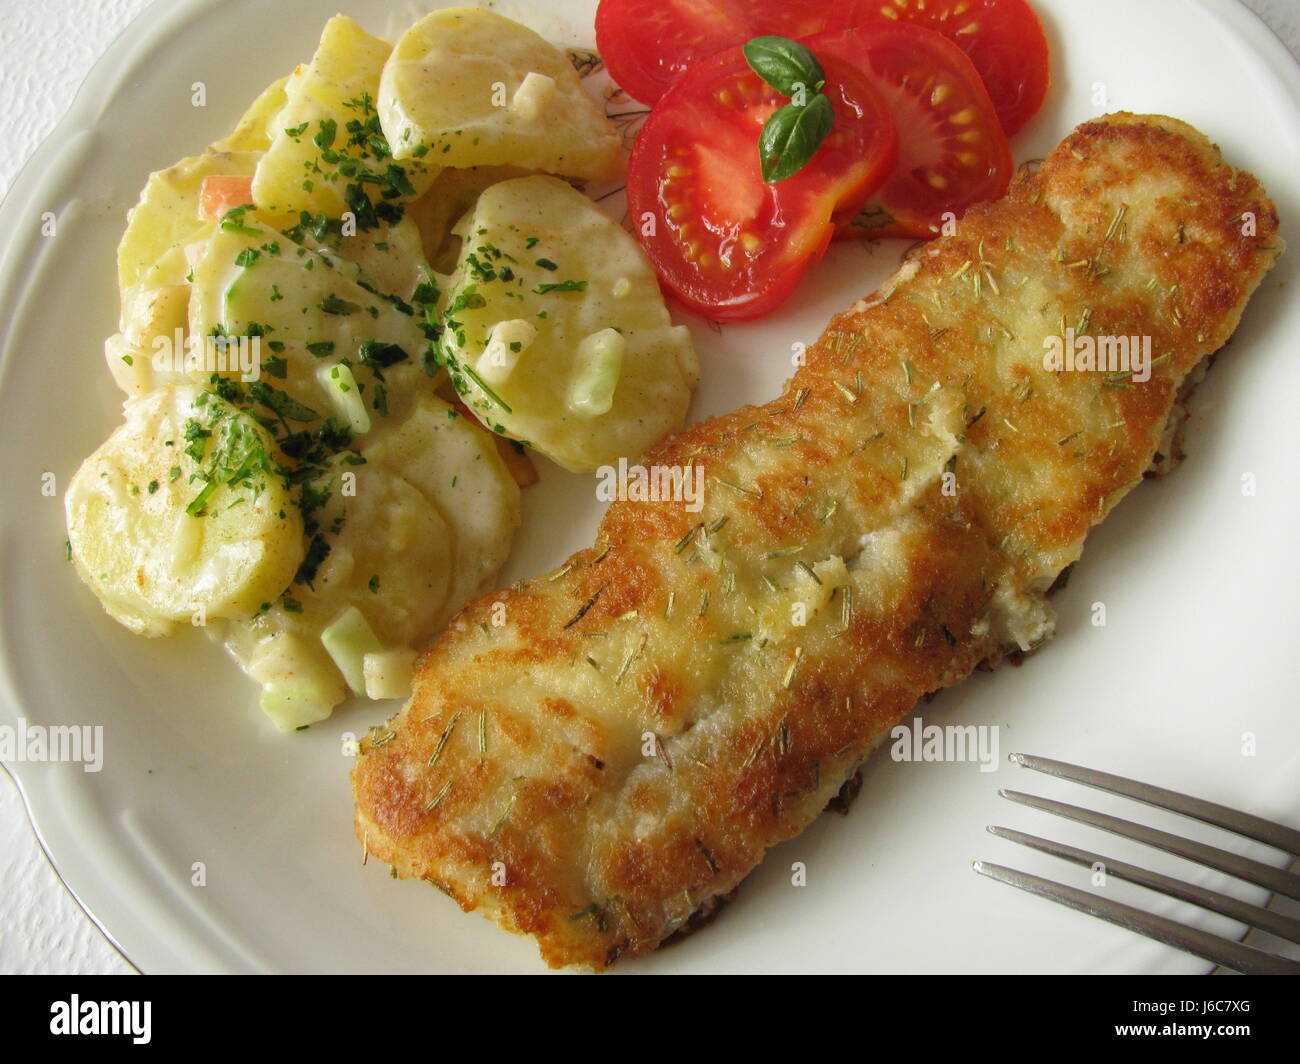 fish fillet with potato salad Stock Photo